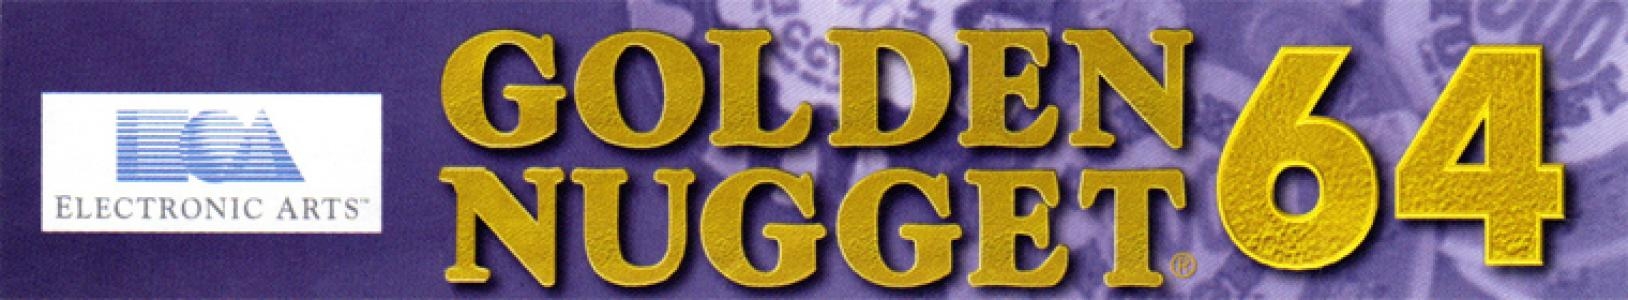 Golden Nugget 64 banner